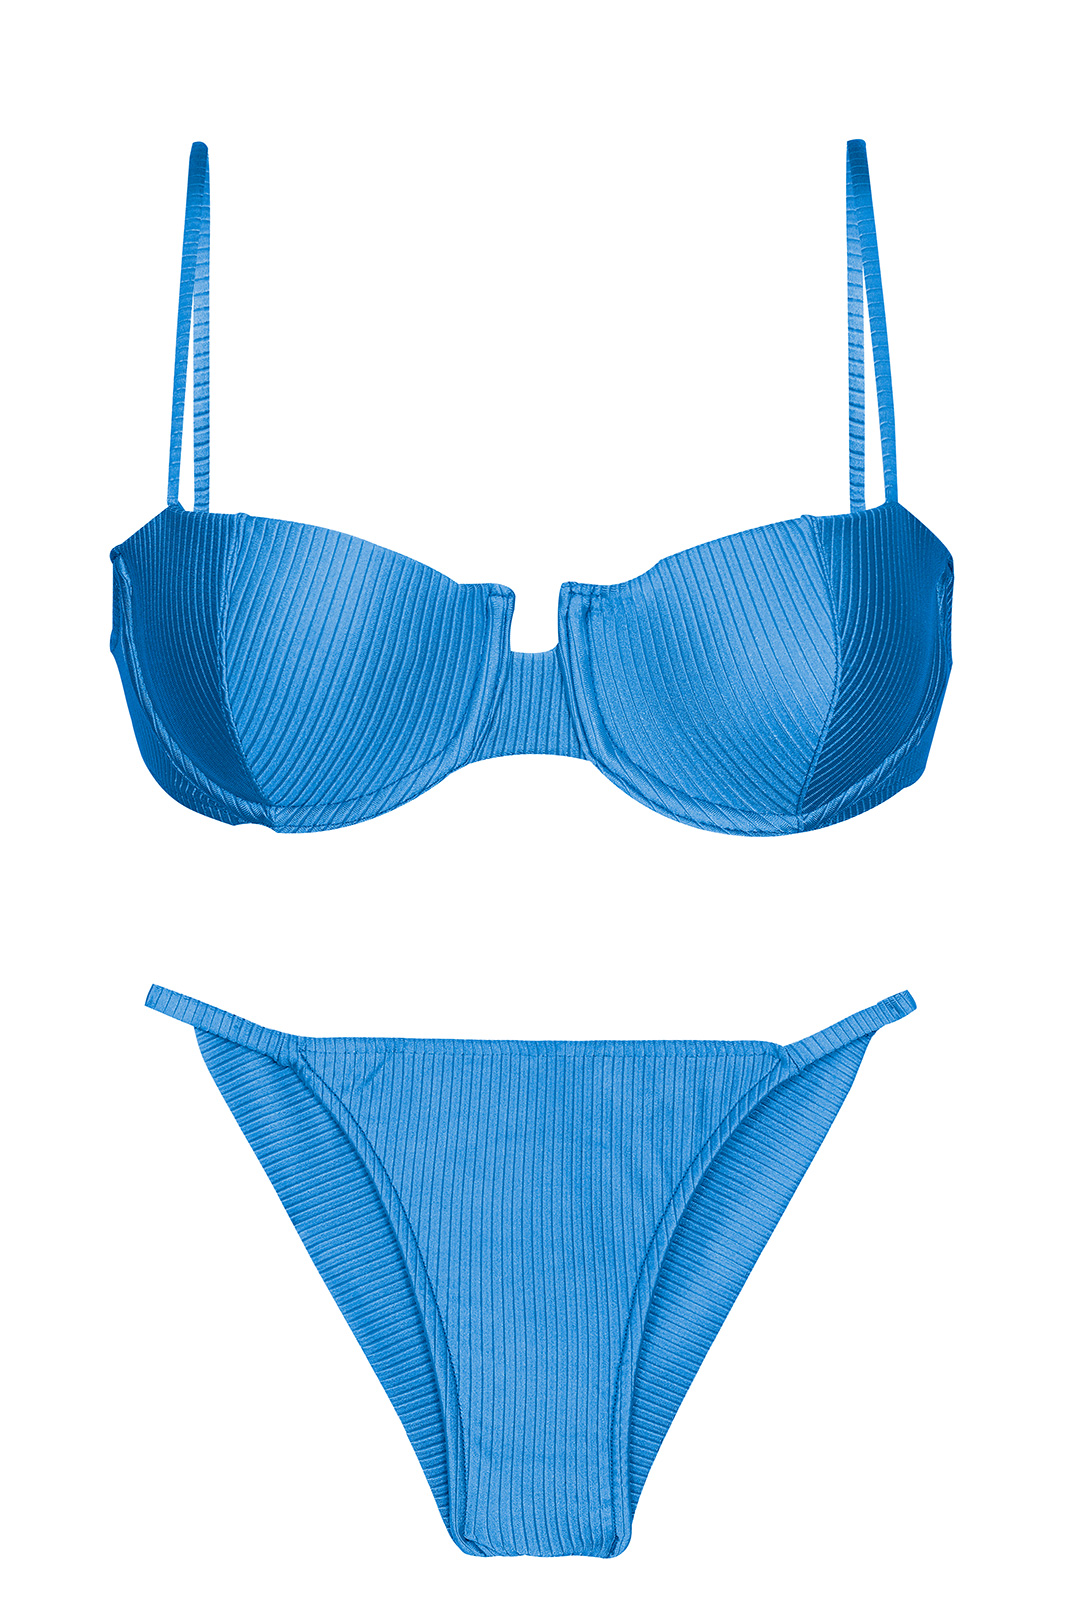 Textured Blue Cheeky Bikini With Balconette Top Set Eden Enseada